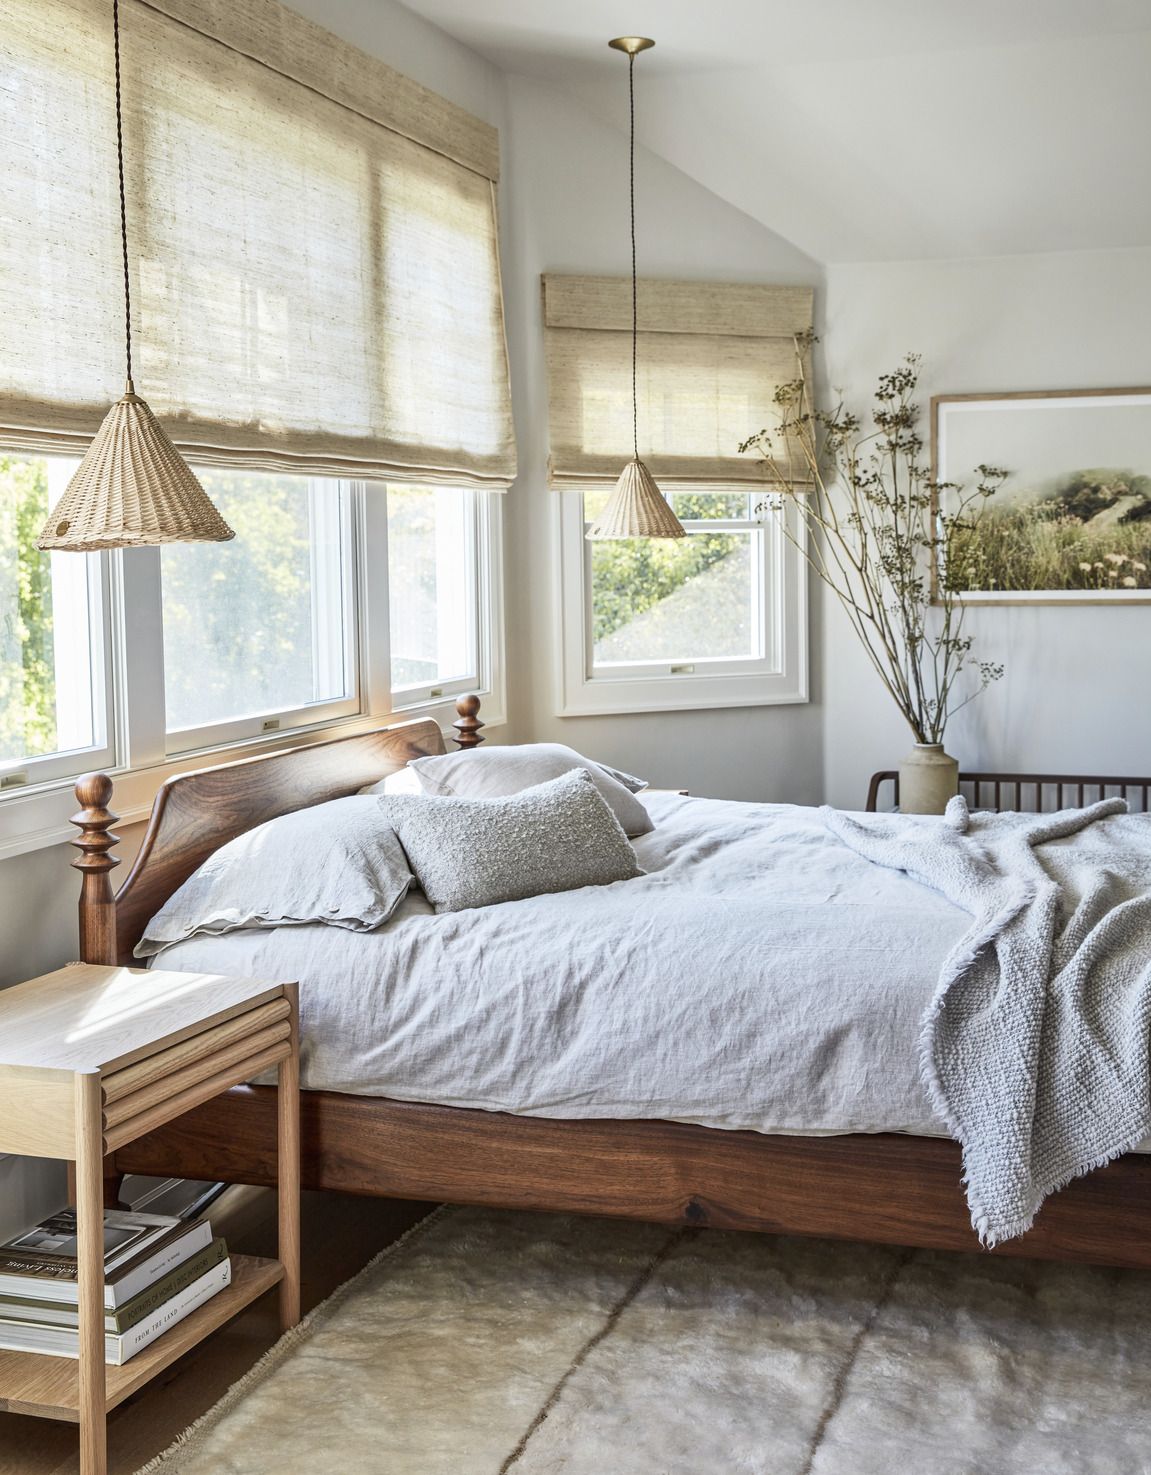 33 Cozy Bedroom Ideas - How to Make Your Bedroom Feel Cozy